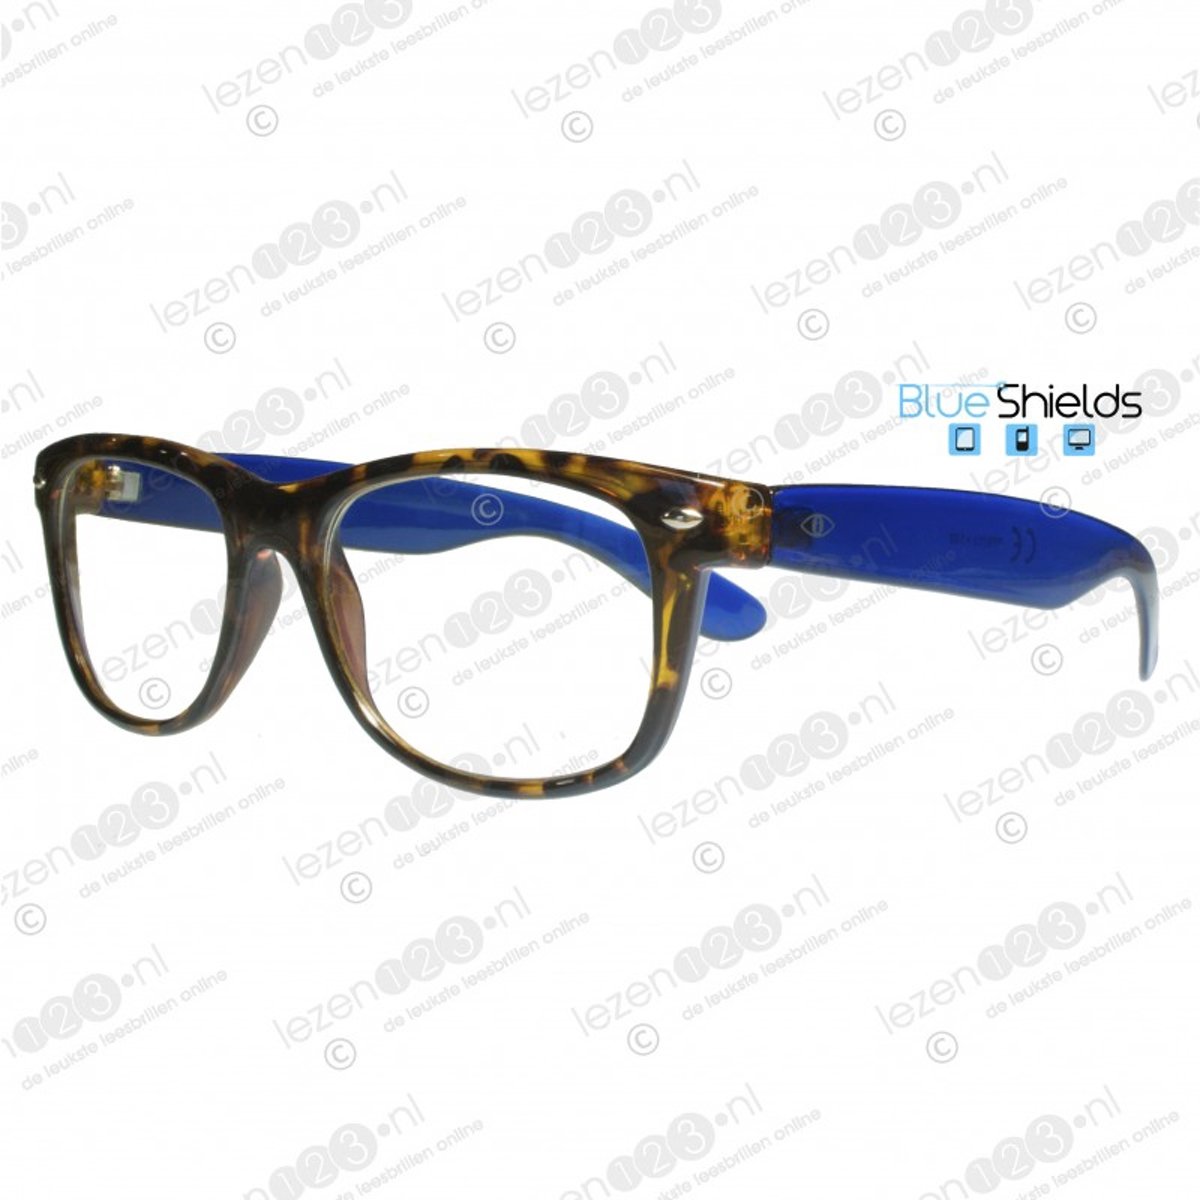 Foto van Icon Eyewear RFE013 +3.00 WayeFarer BlueShields bril - blauw licht filter lens - Tortoise montuur, blauwe poten